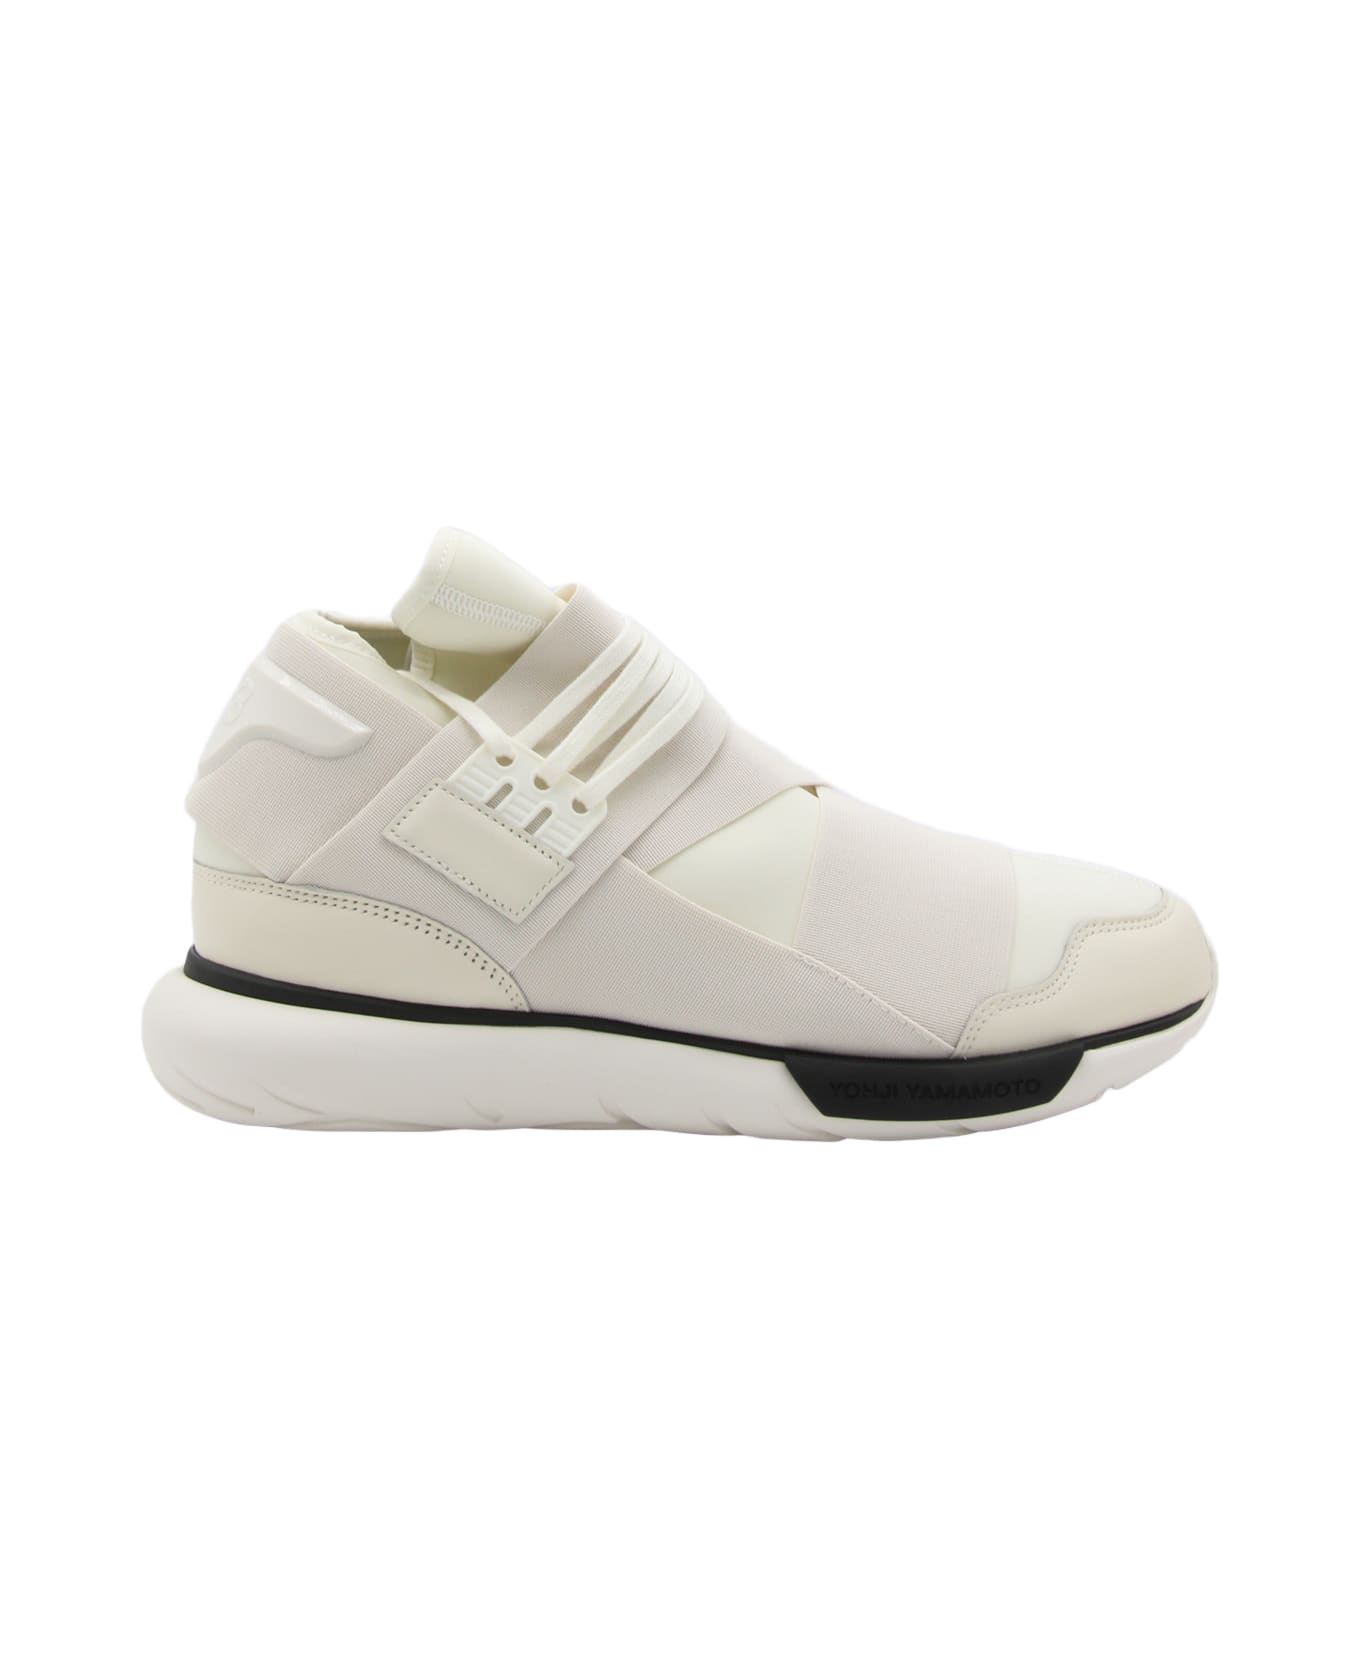 Y-3 White Canvas Sneakers - OFF WHITE/CREAM WHITE/BLACK